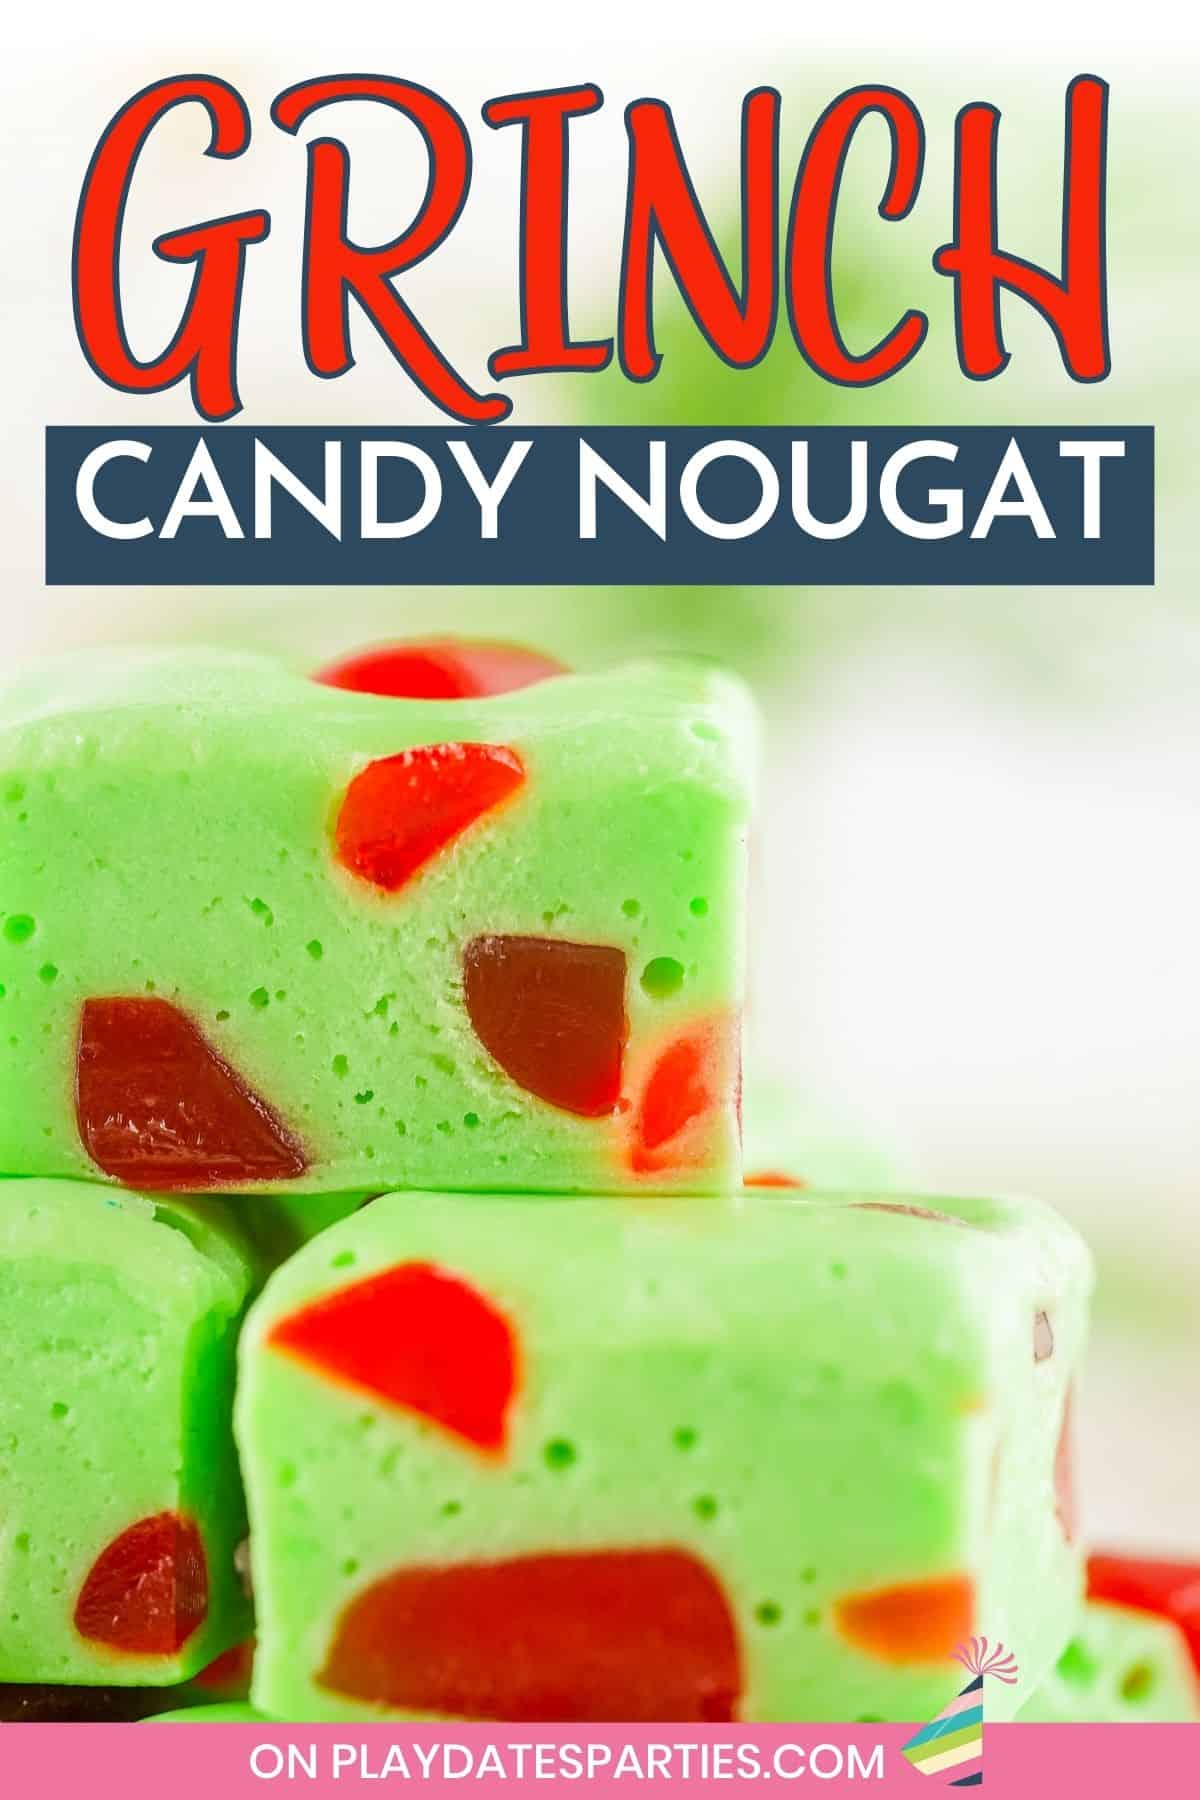 Grinch Candy Nougat Pin Image.